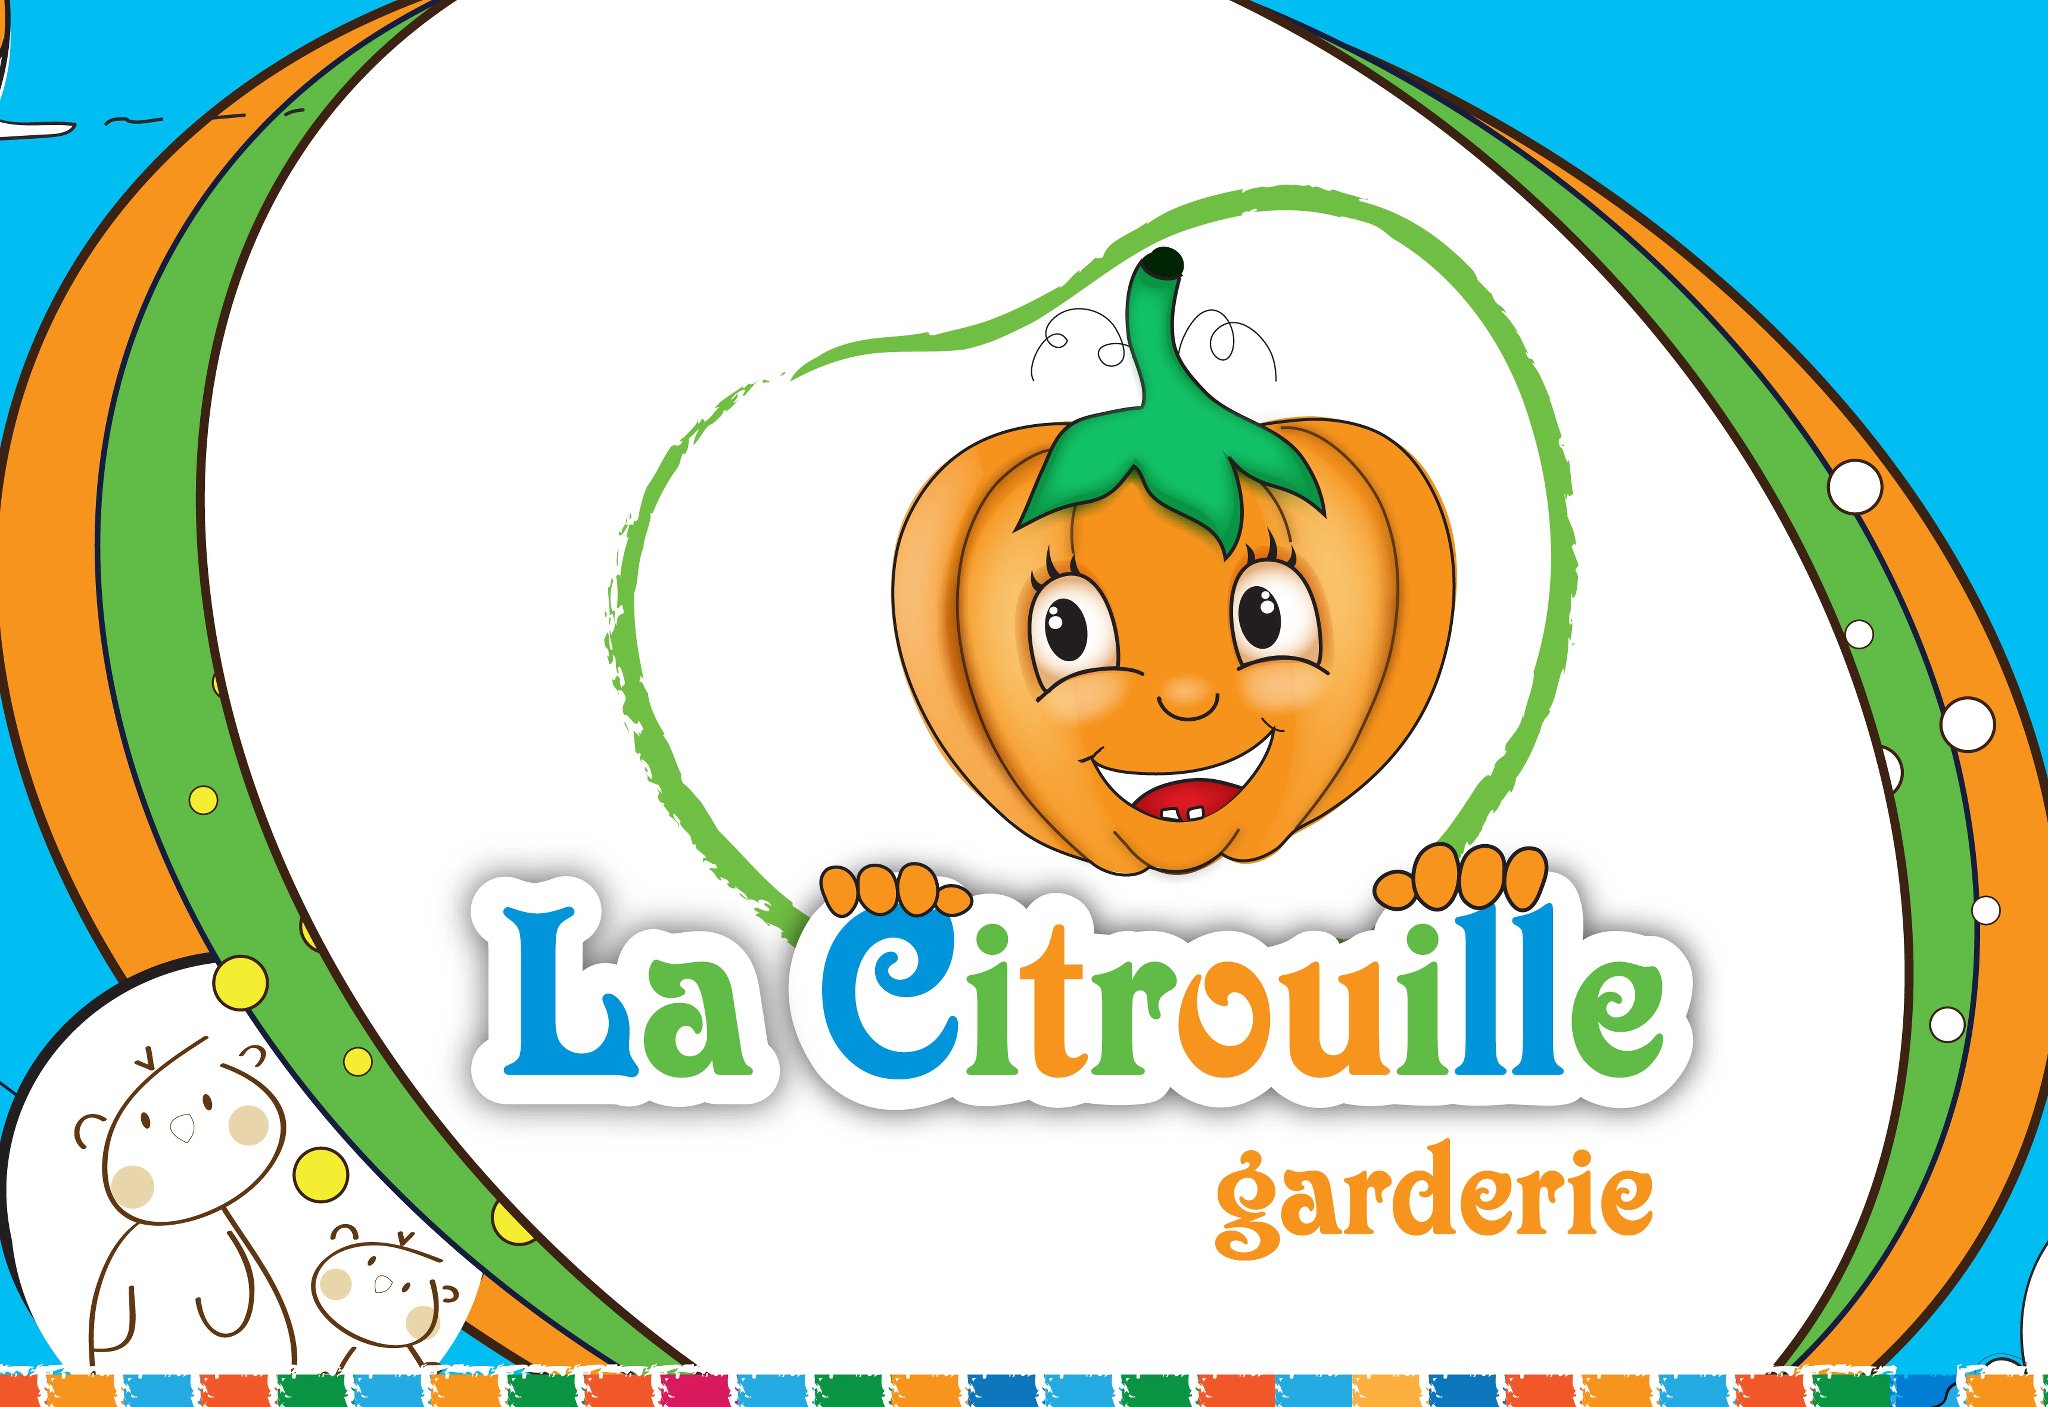 Nursery logo La citrouille